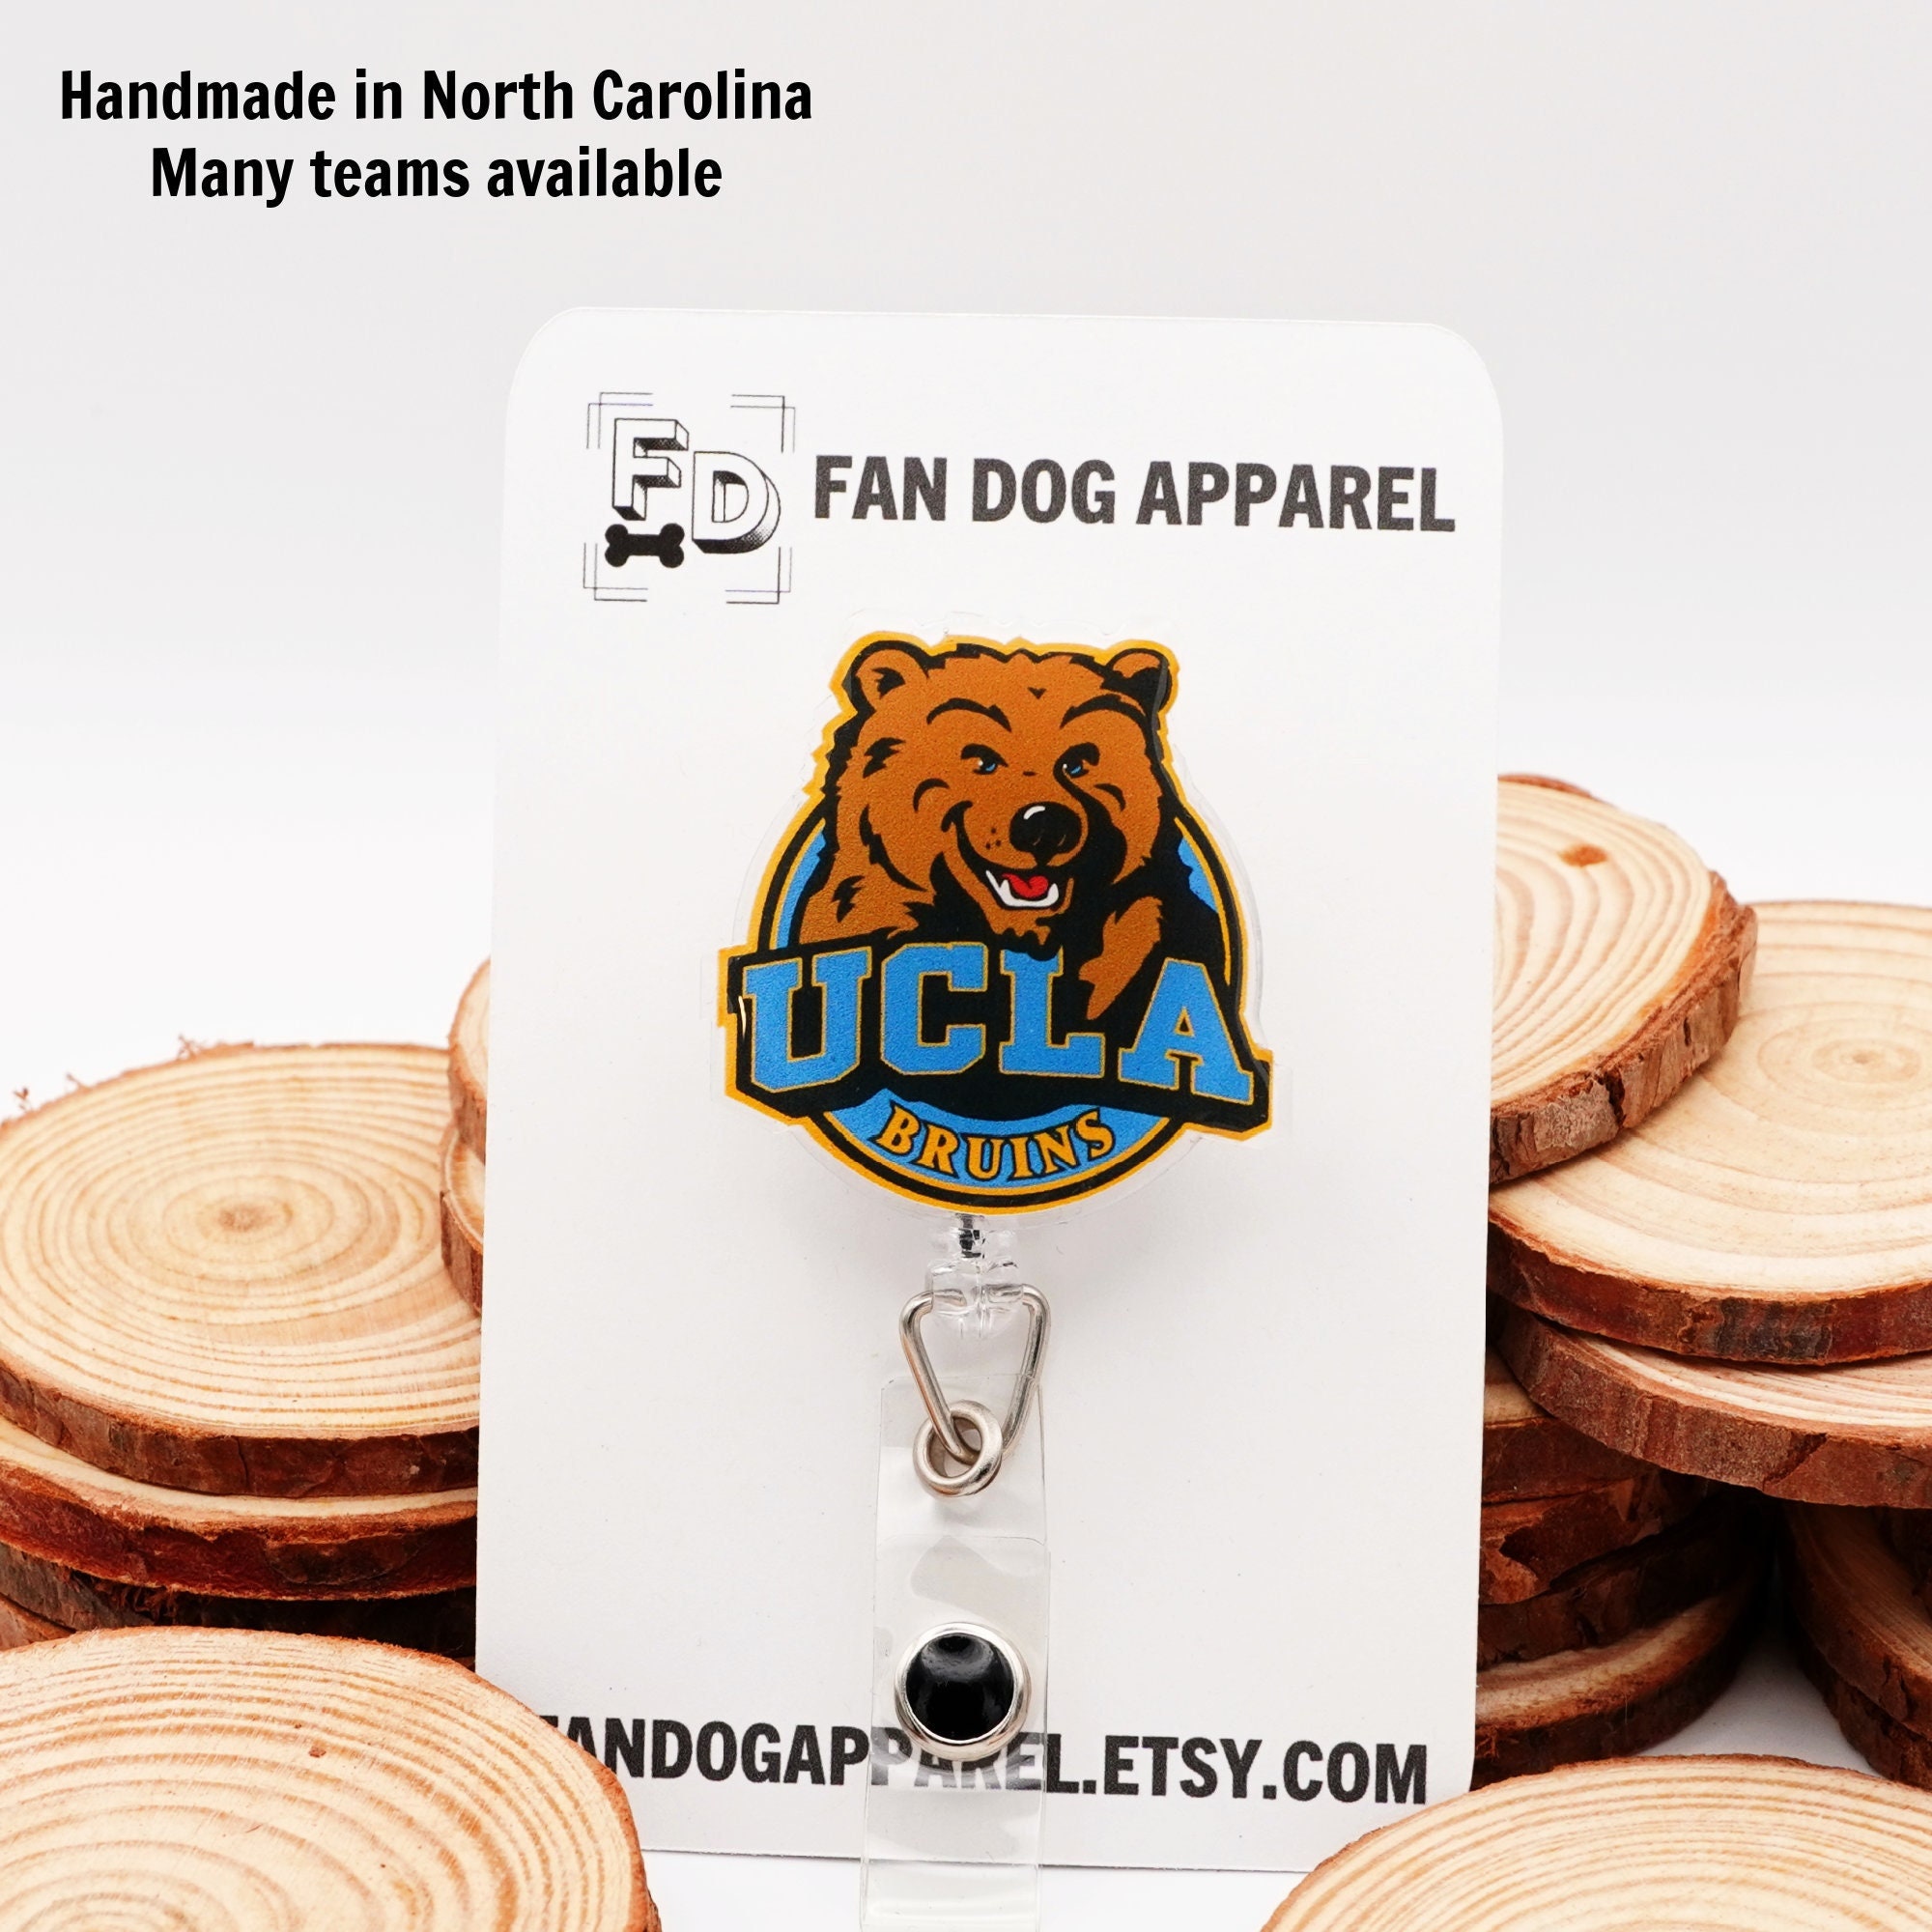 UCLA Bruins Handmade Pet Hoodies – 3 Red Rovers